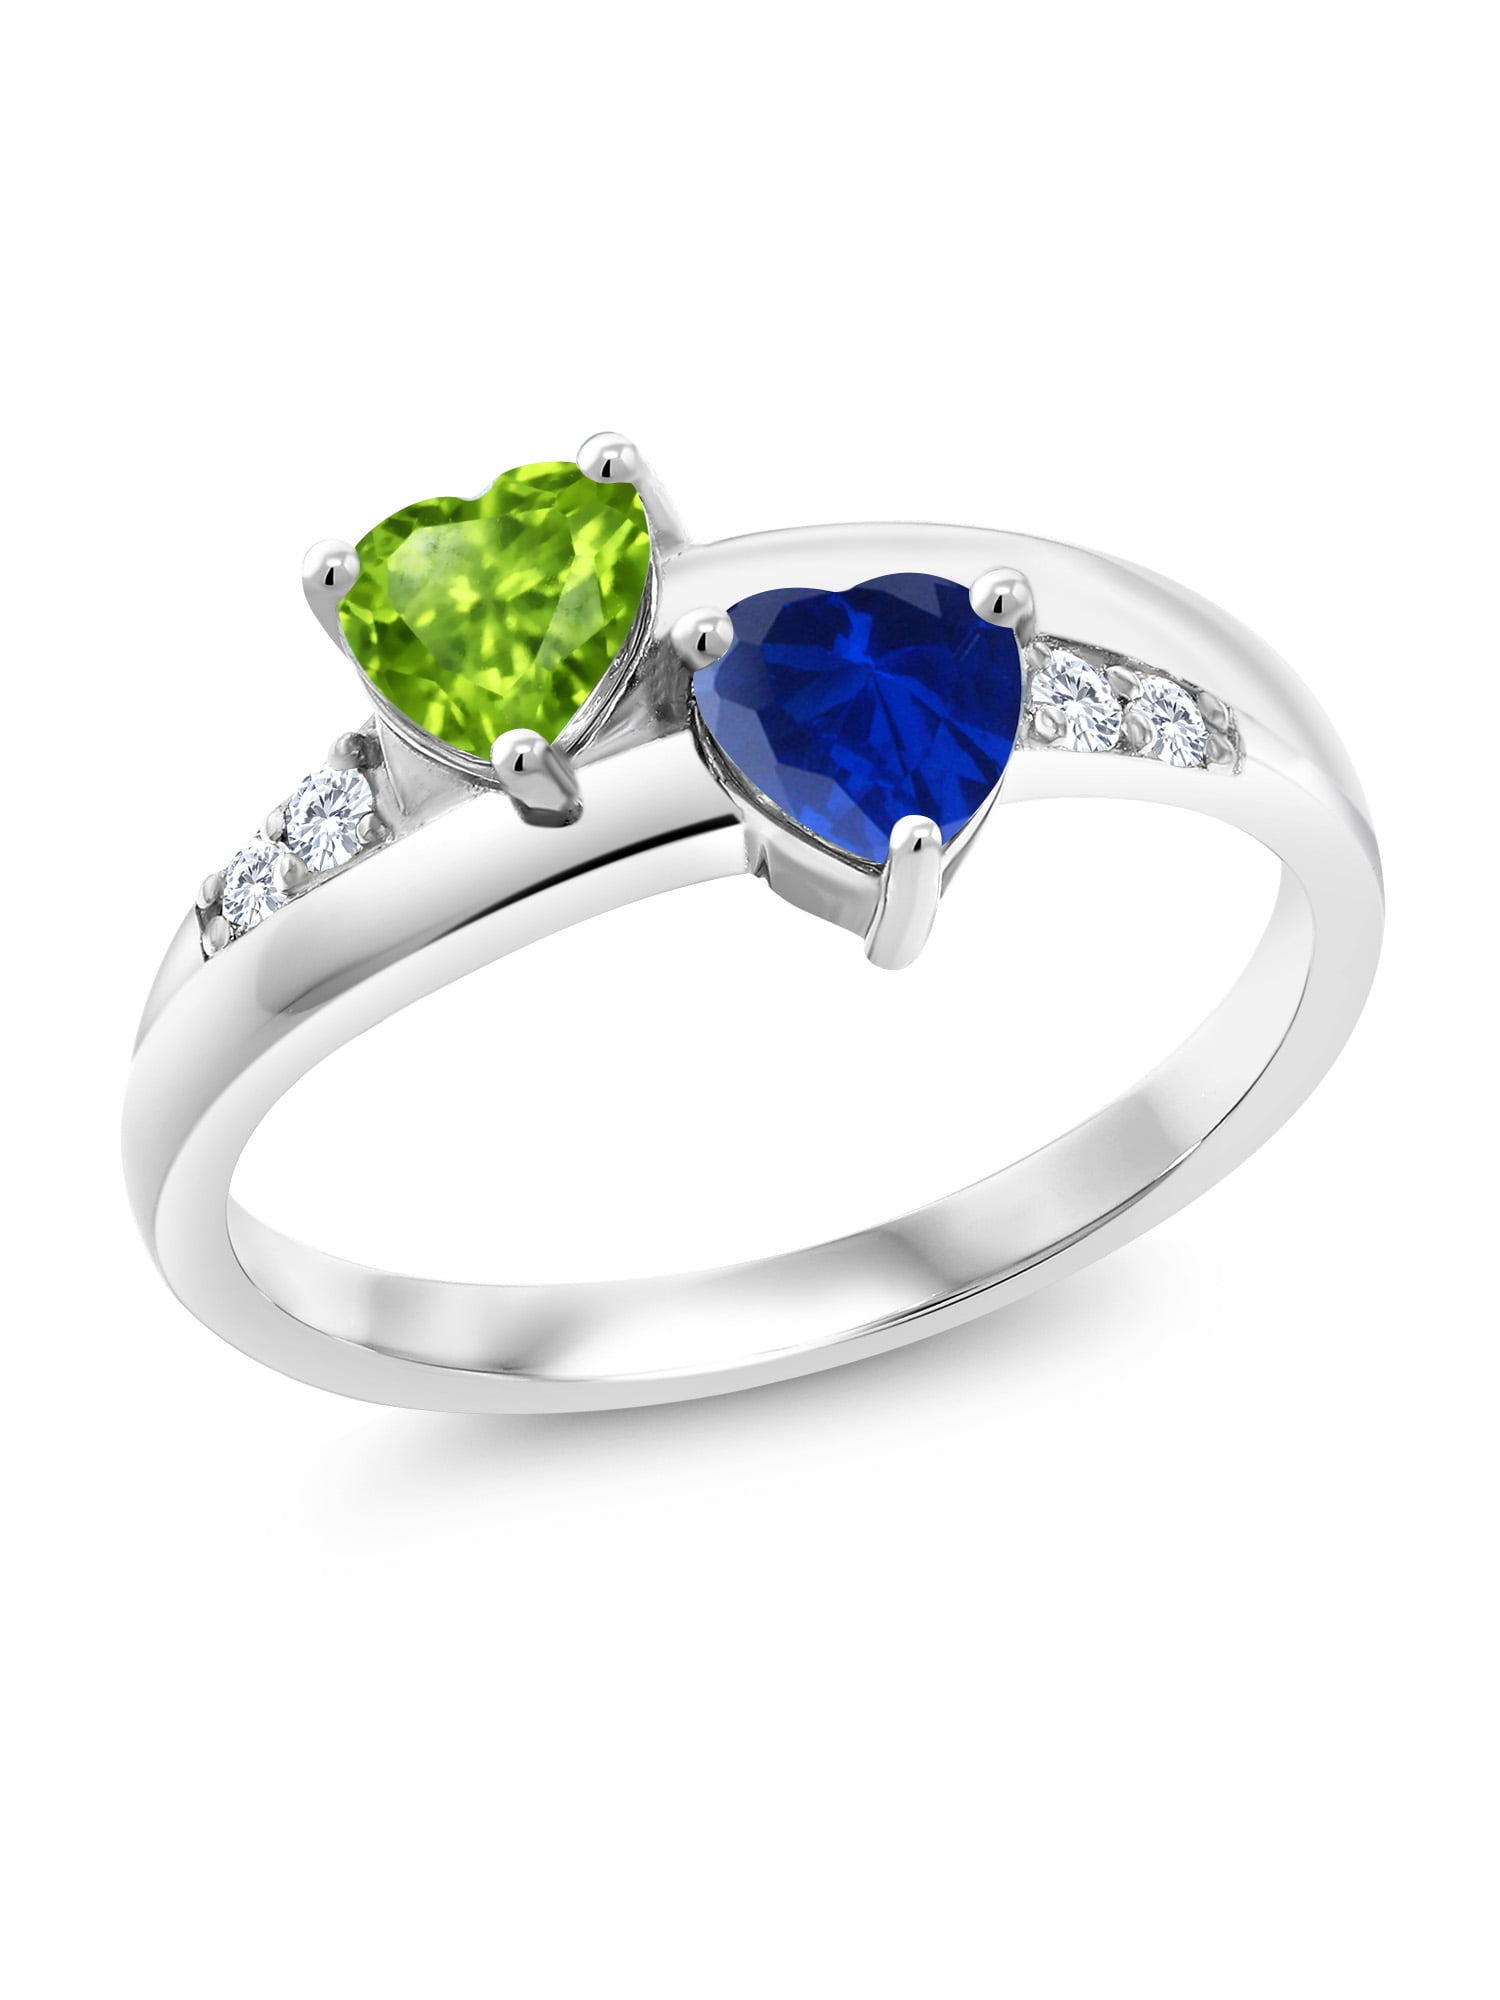 Elegant 925 Sterling Silver Green Emerald Peridot Blue Sapphire Ring Size 10 